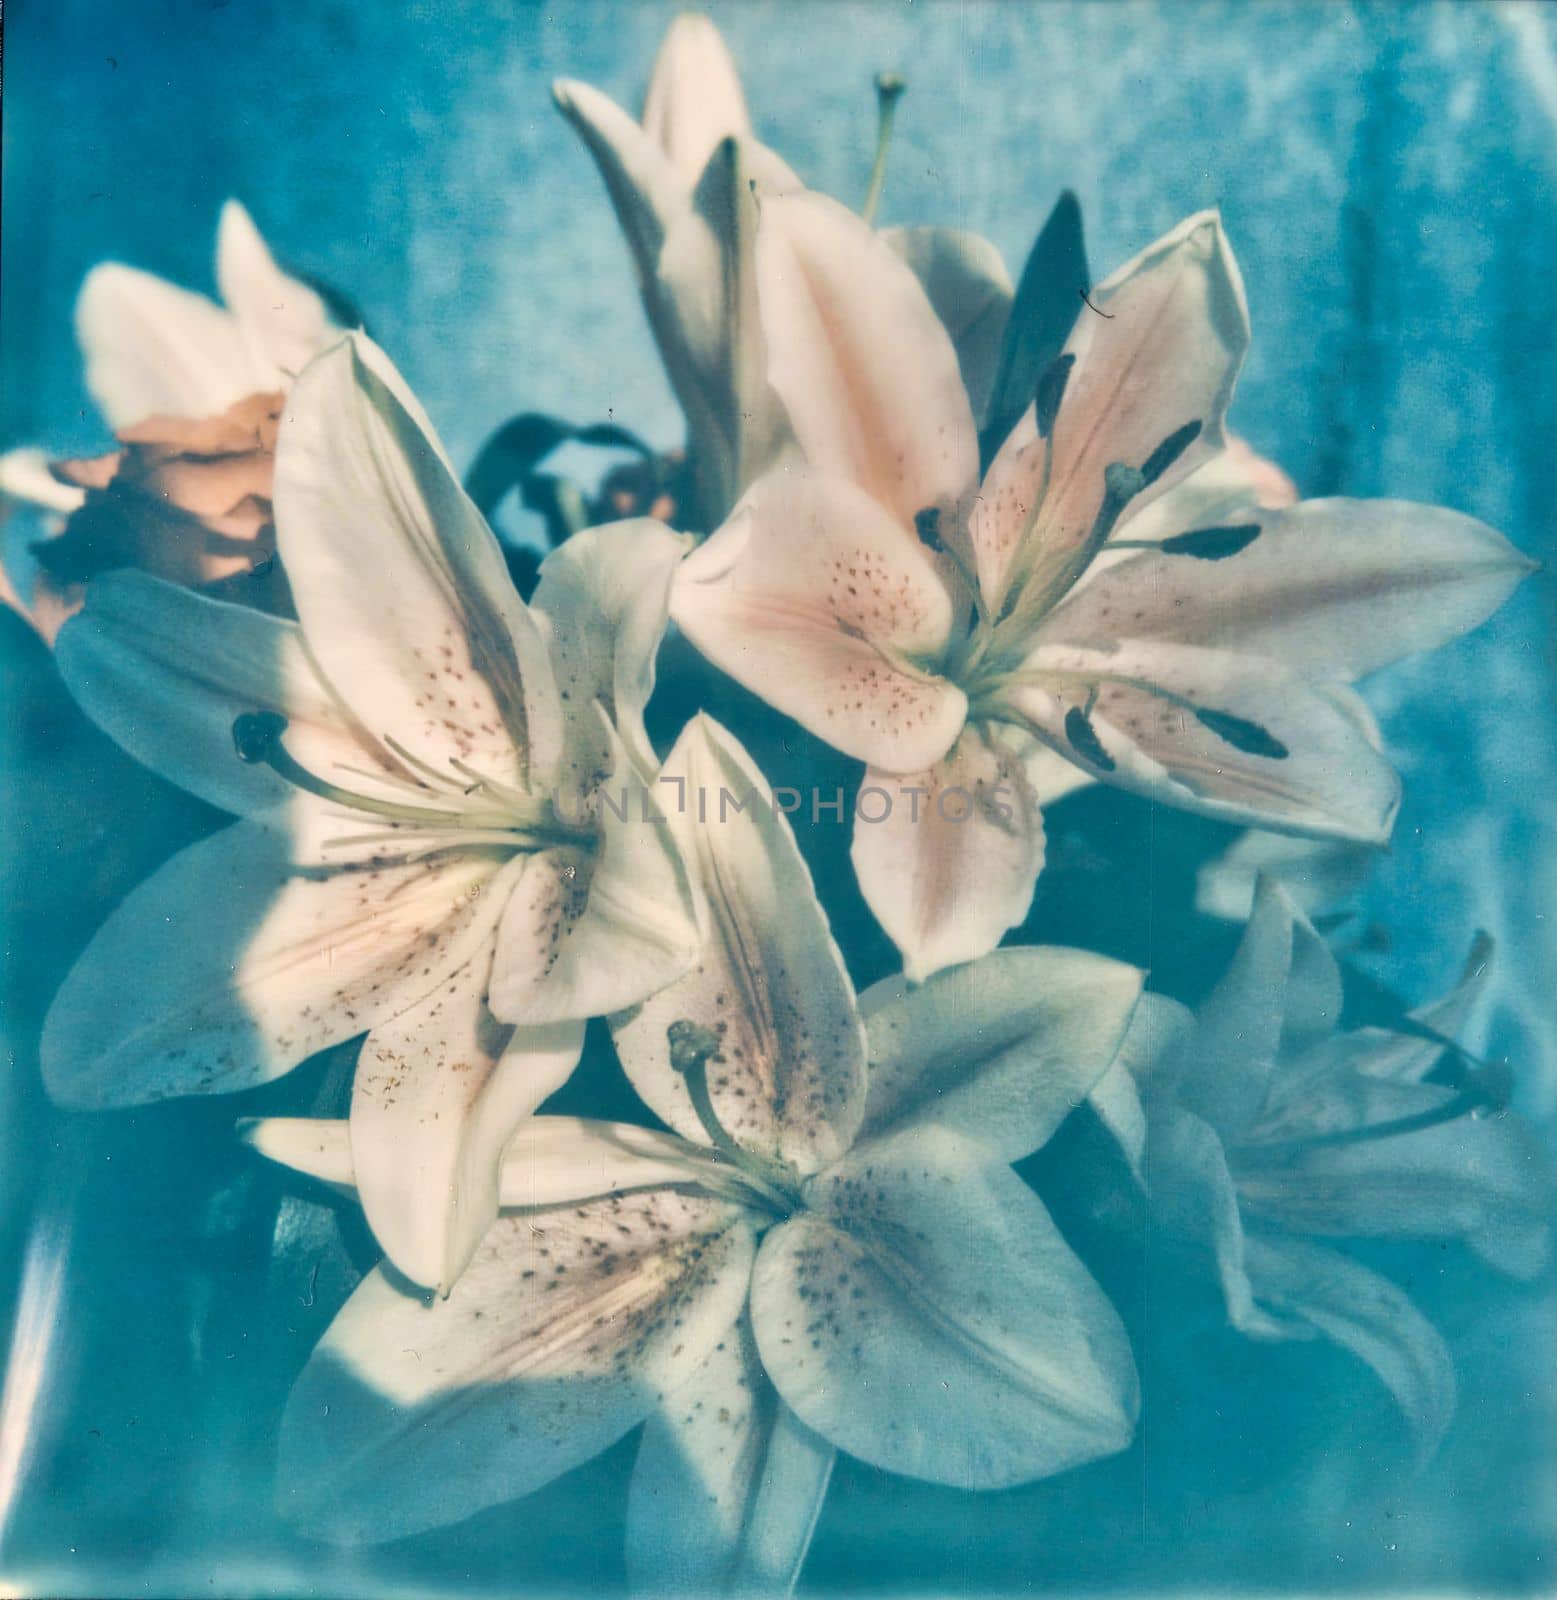 Vintage photo of garden flowers indoor. Bouquet of blue flowers. download image by igor010